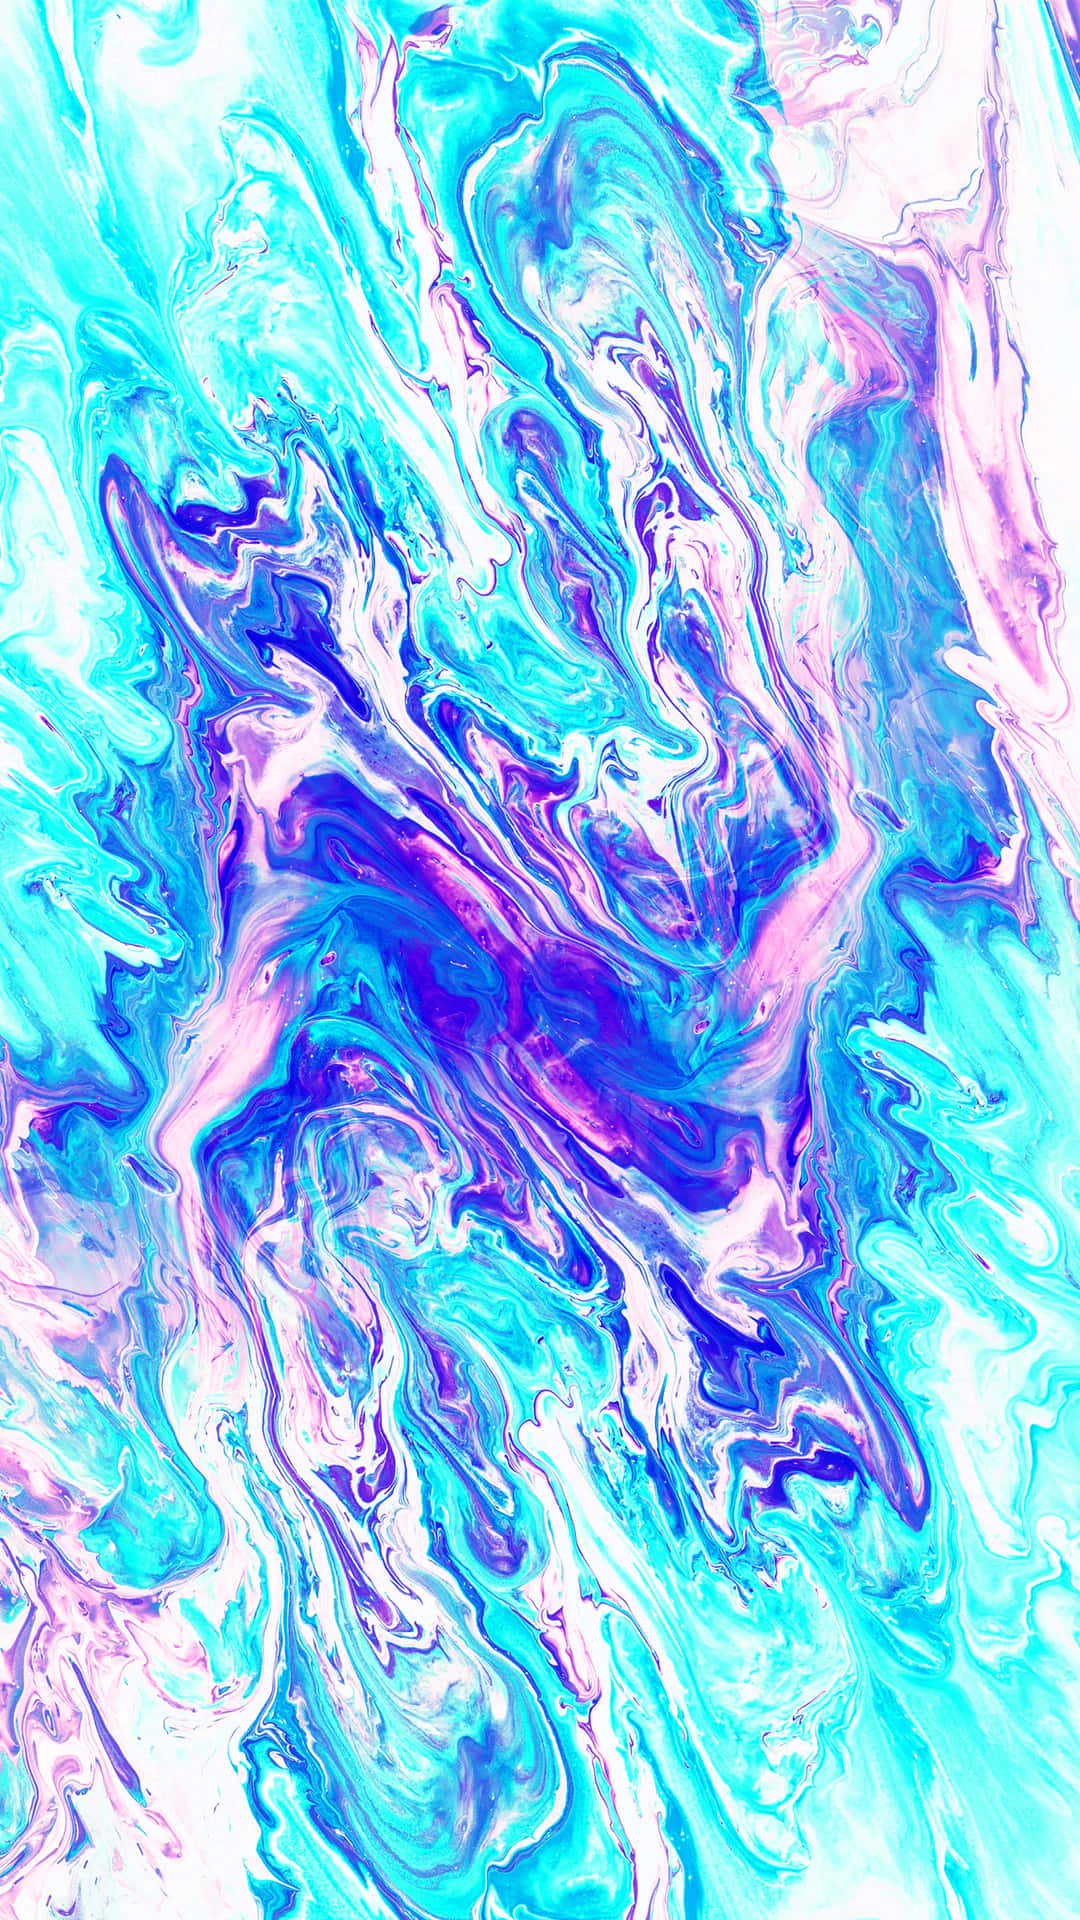 Unailustración Abstracta De Mármol Veneciano En Tonos De Verde Azulado, Con Detalles Deslumbrantes E Intrincados. Fondo de pantalla